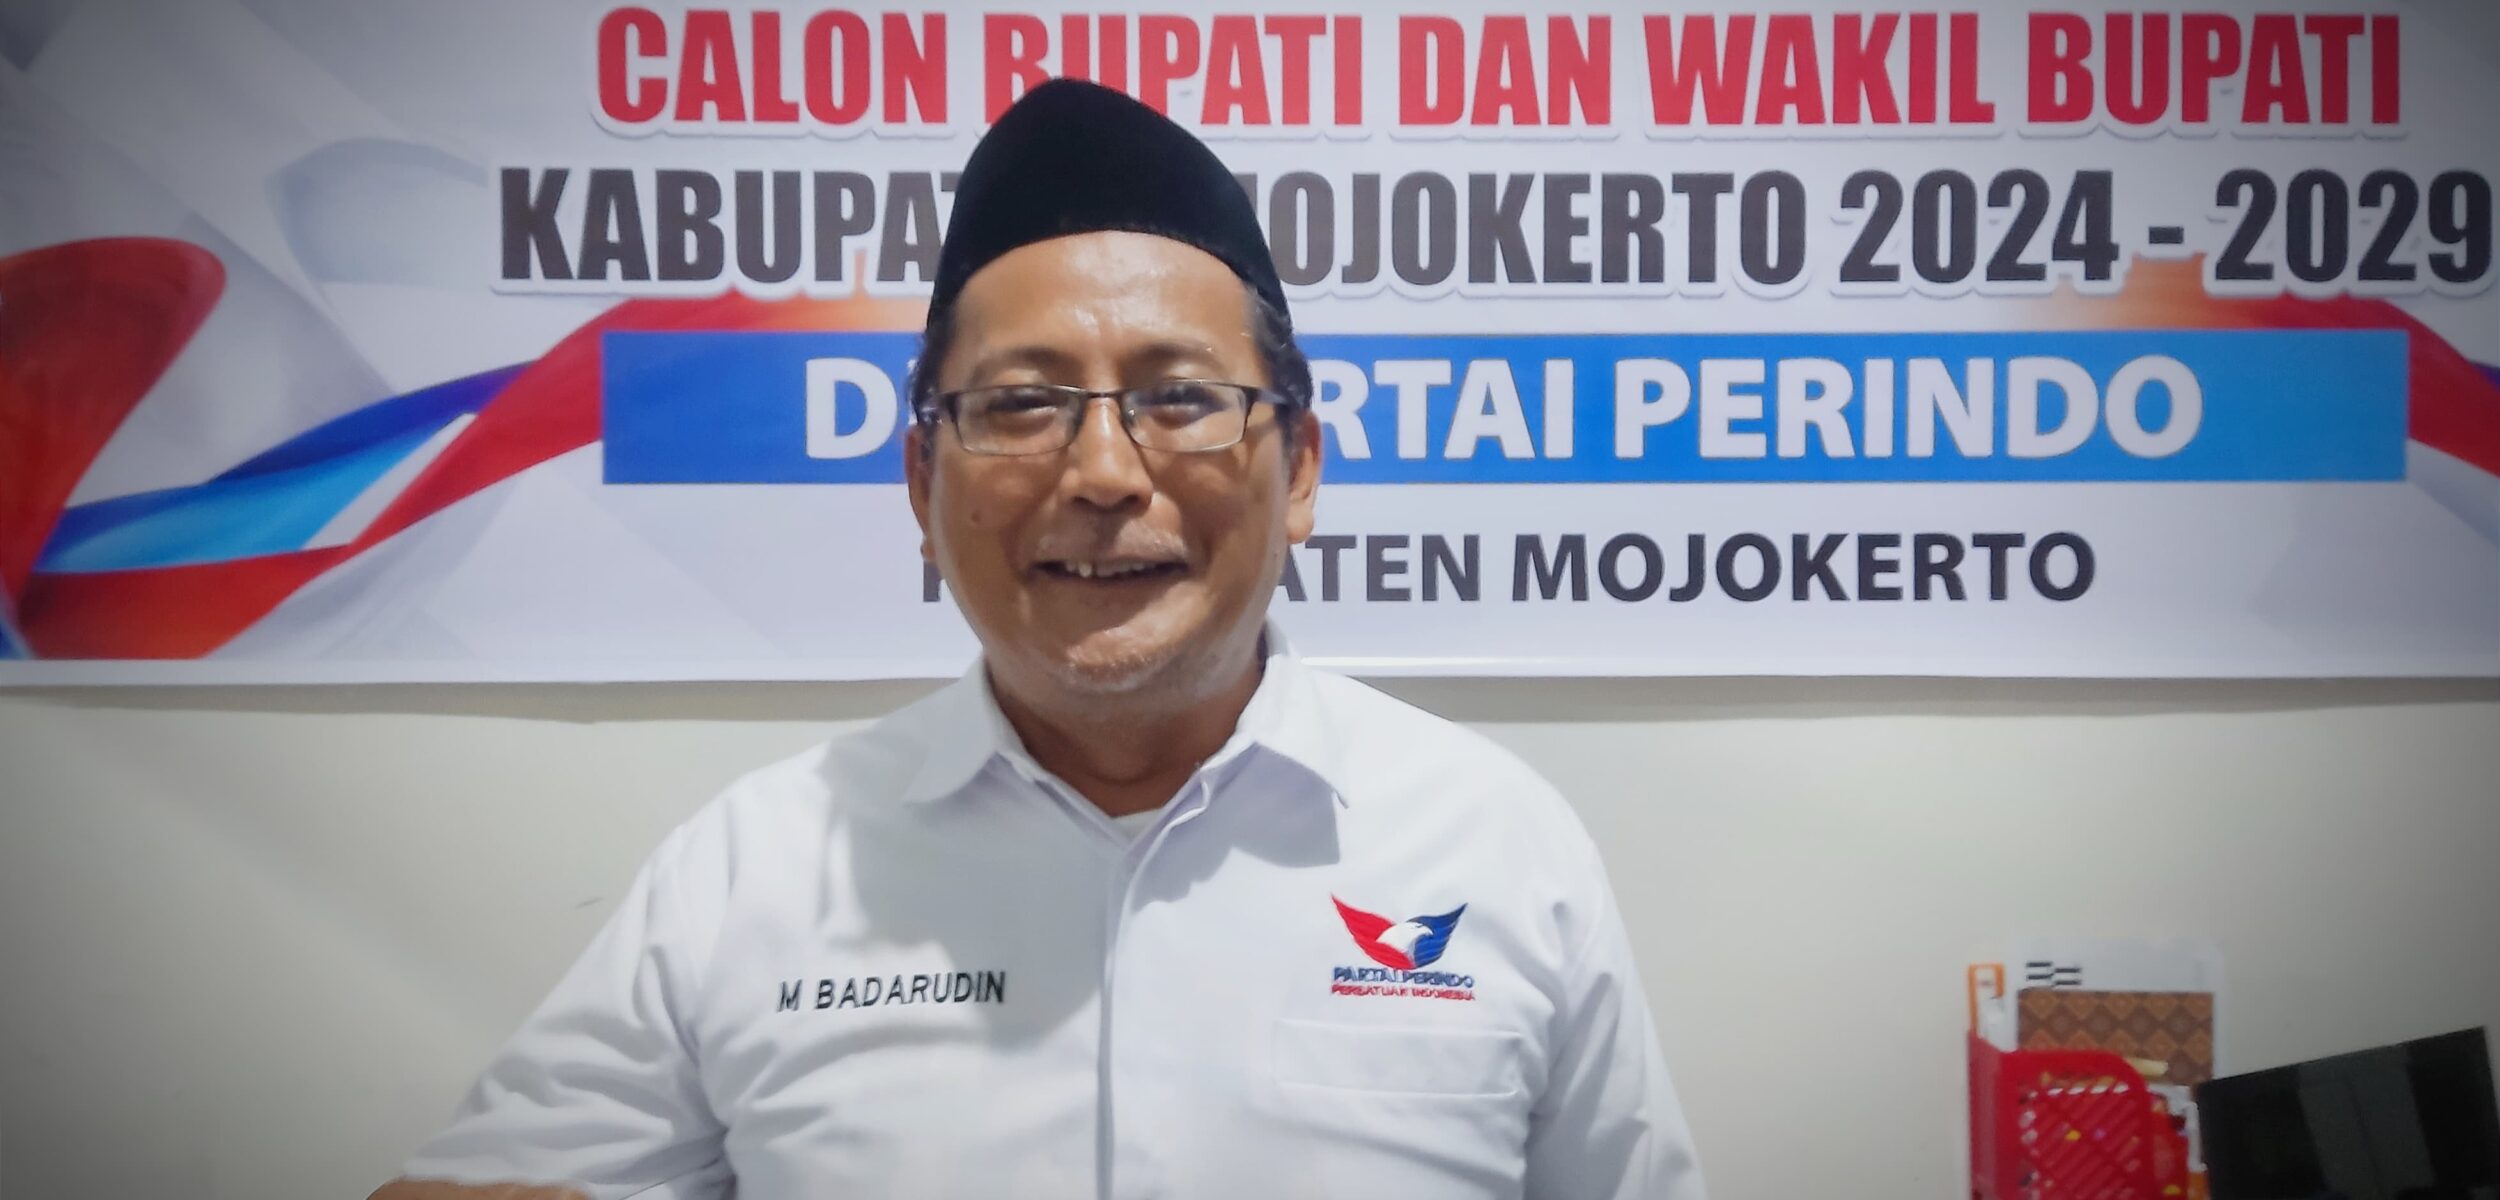 Mohammad Badaruddin, Ketua Desk DPW Jawa Timur Partai Perindo